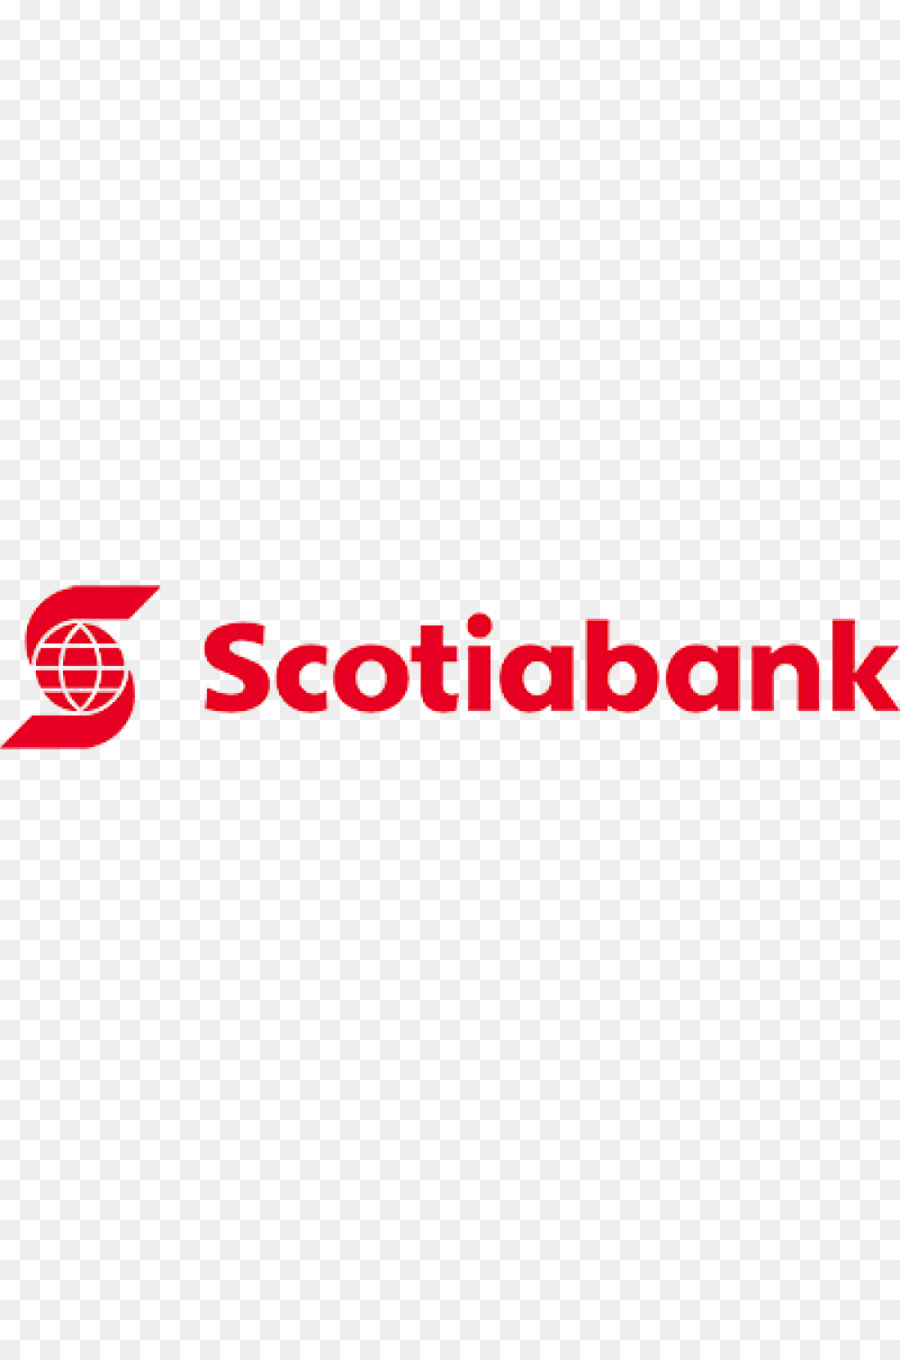 Bank of Montreal Scotiabank Business Toronto–Dominion Bank finanzieren - illustration der Mode Frau